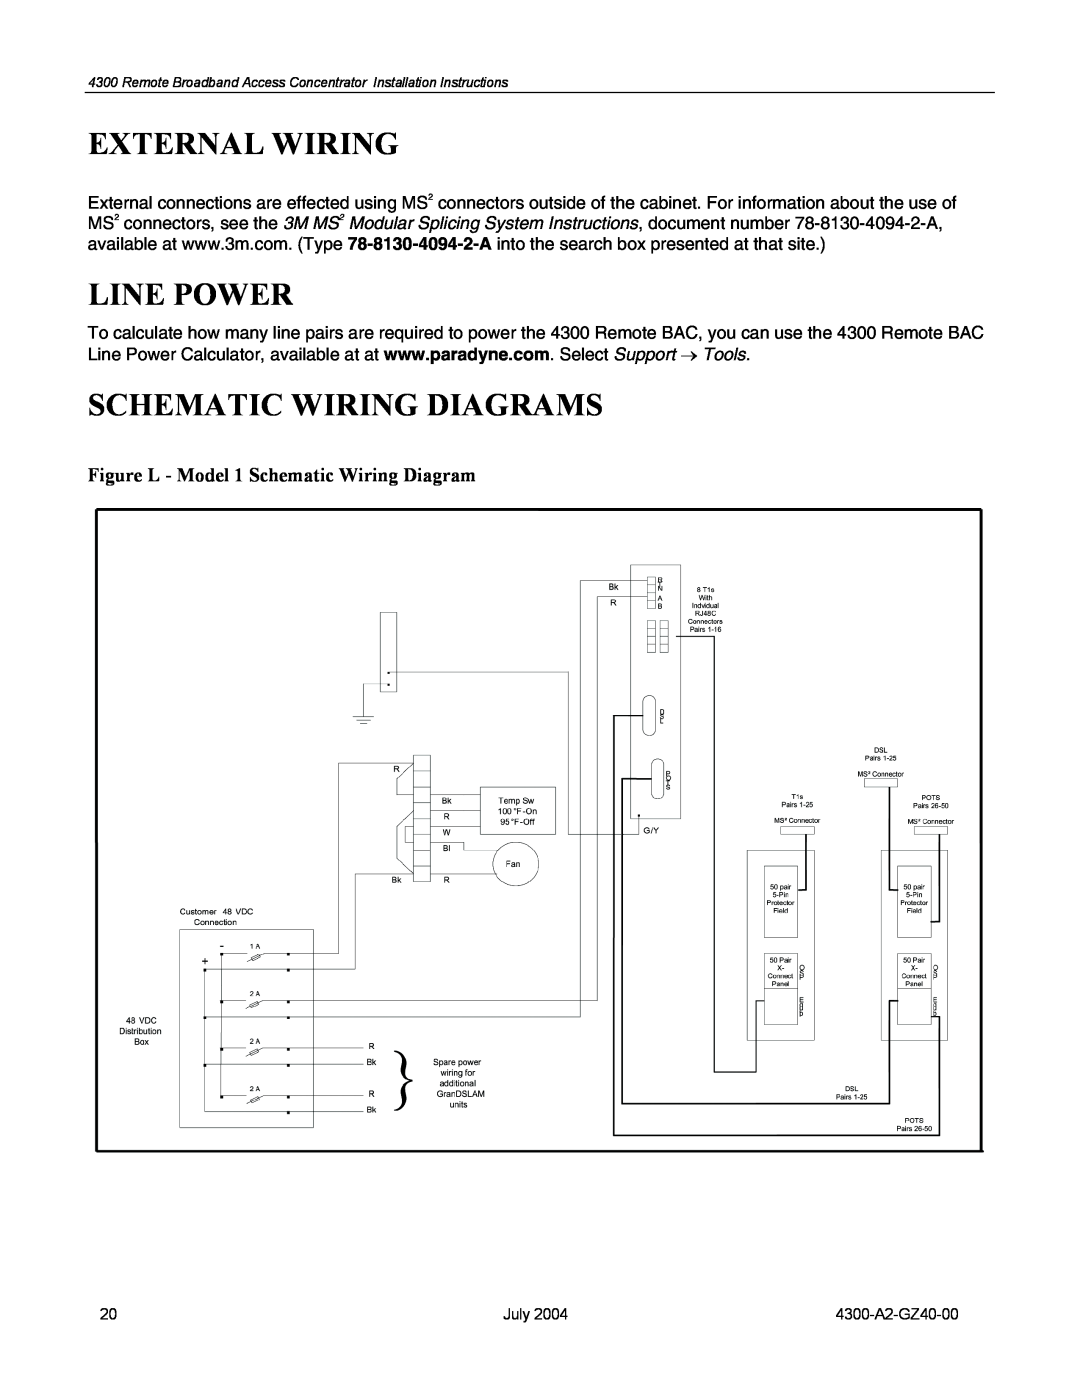 Paradyne 4300 External Wiring, Line Power, Schematic Wiring Diagrams, Figure L - Model 1 Schematic Wiring Diagram, July 